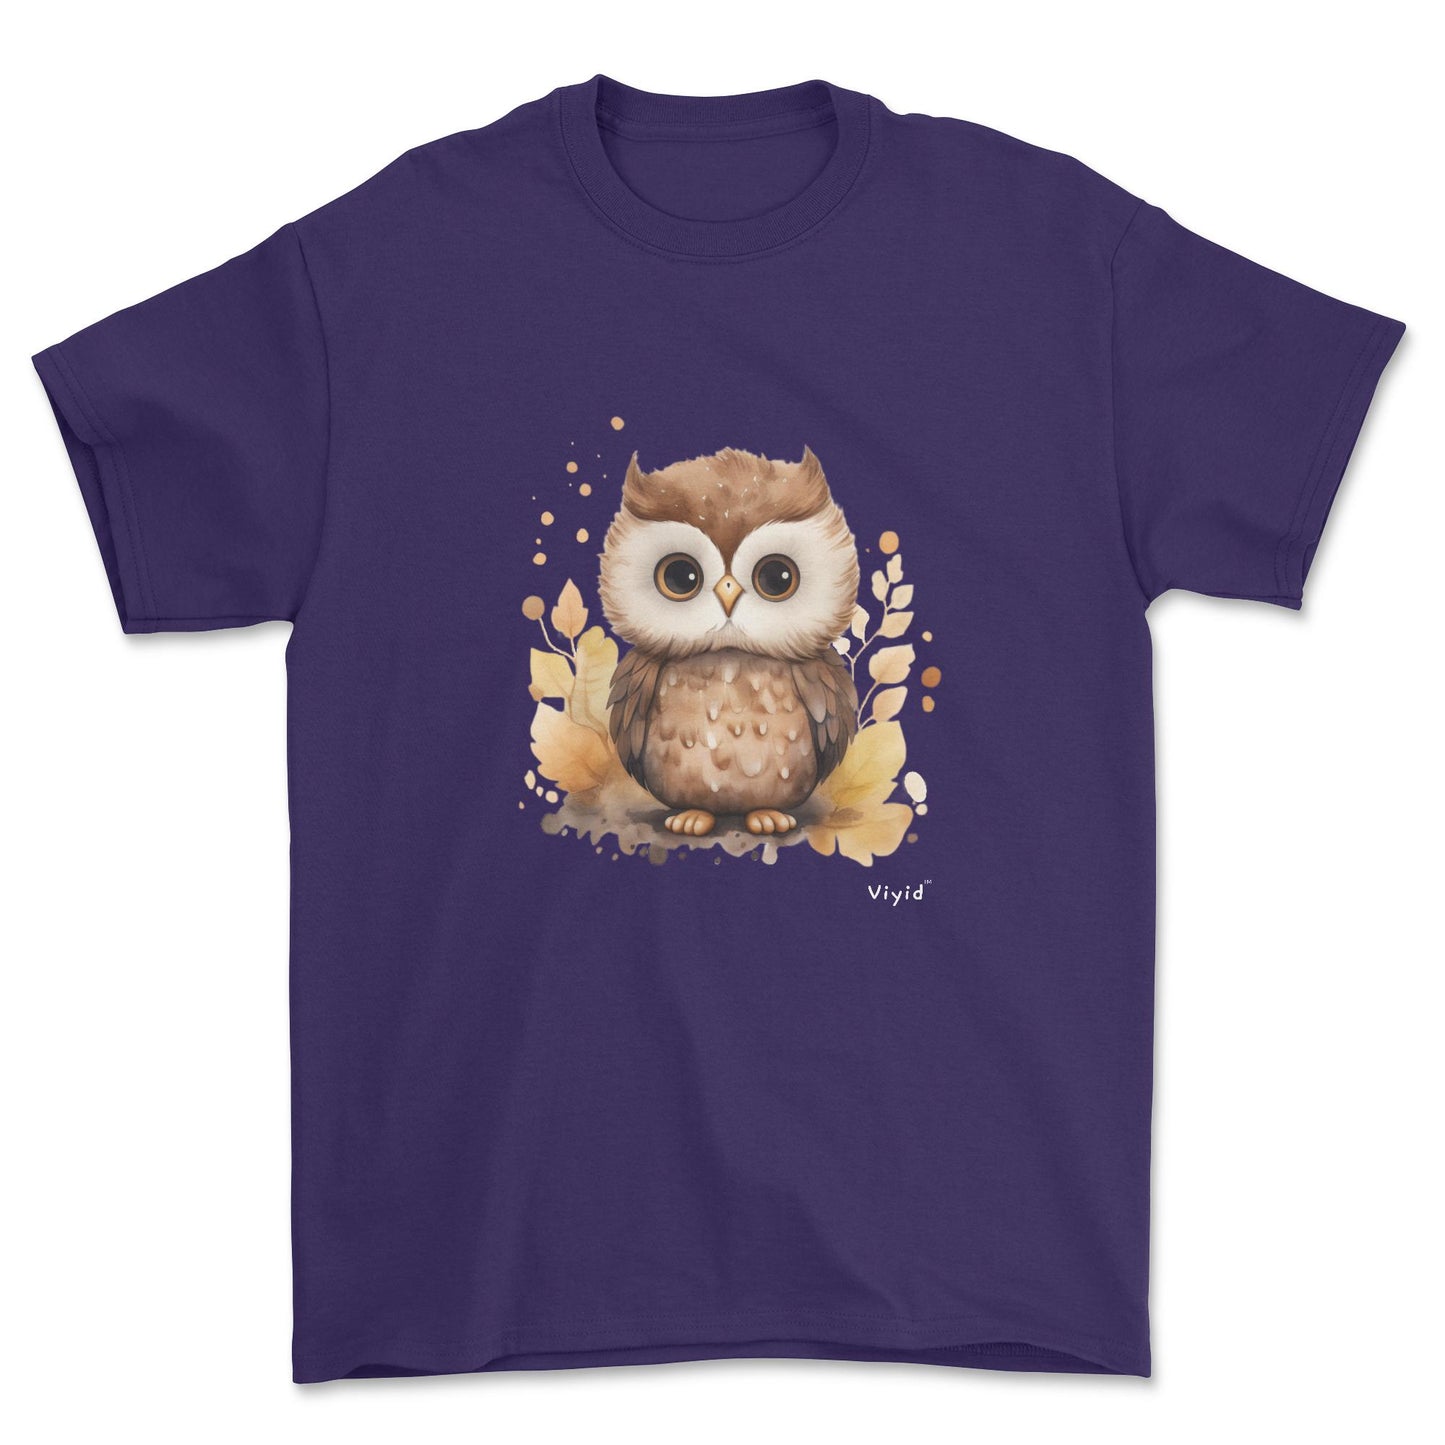 nocturnal owl adult t-shirt purple